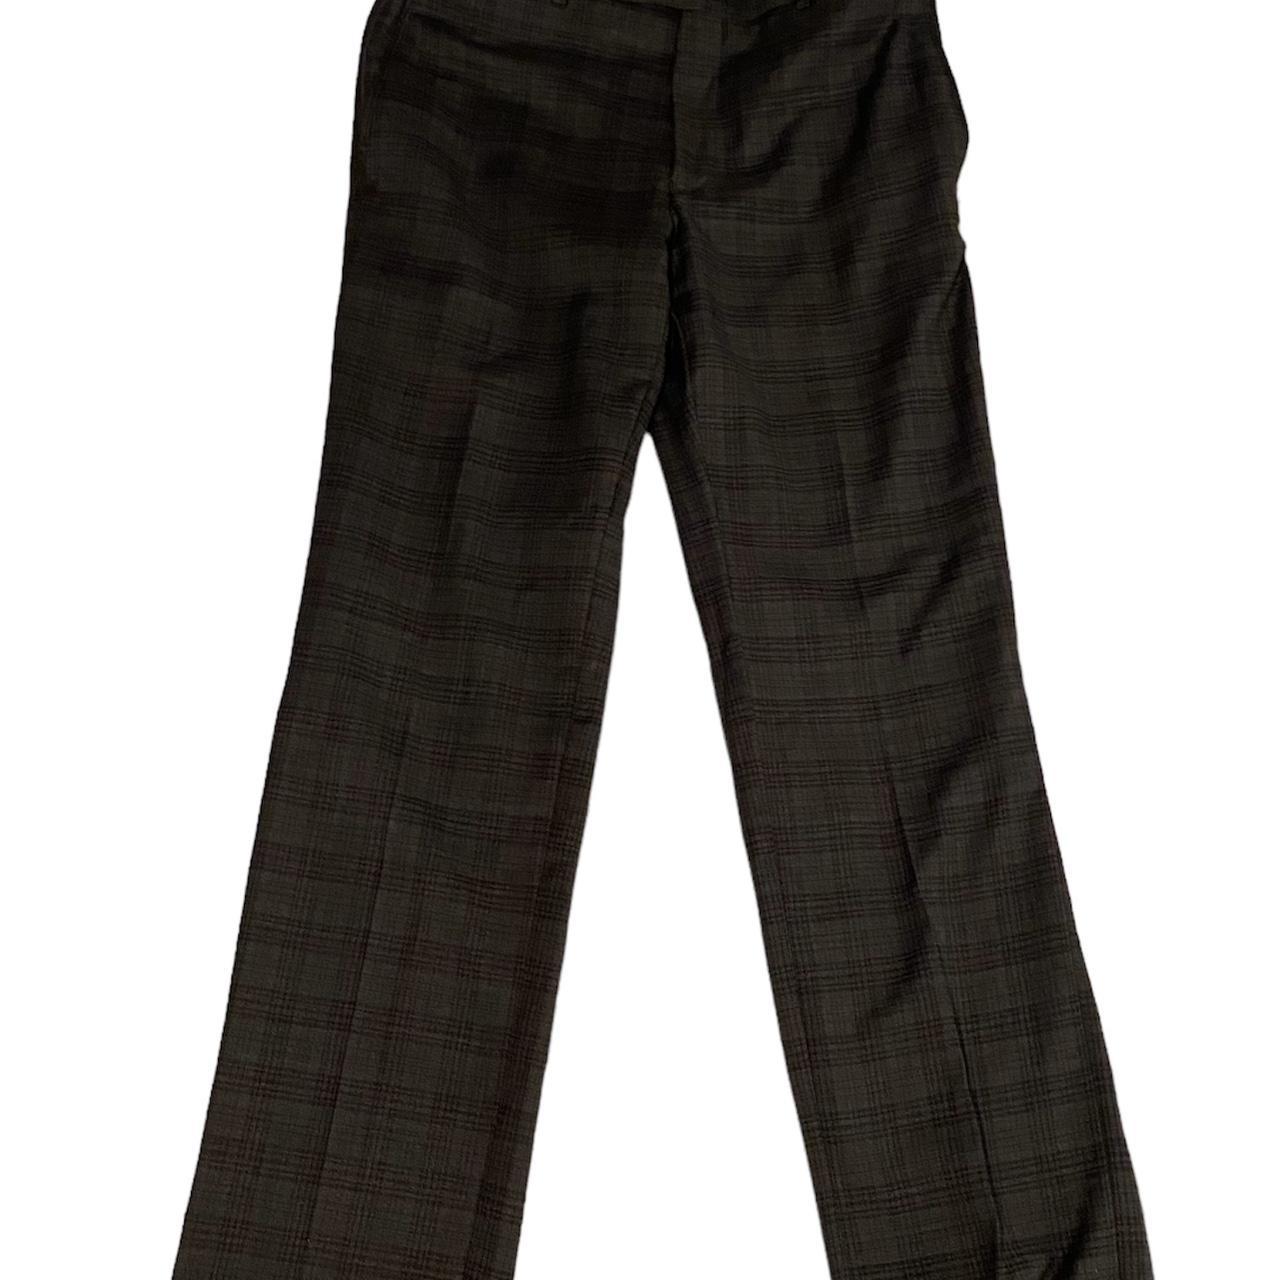 Jeff Banks Teal Plain Slim Fit Ivy League Trousers | Jeff Banks